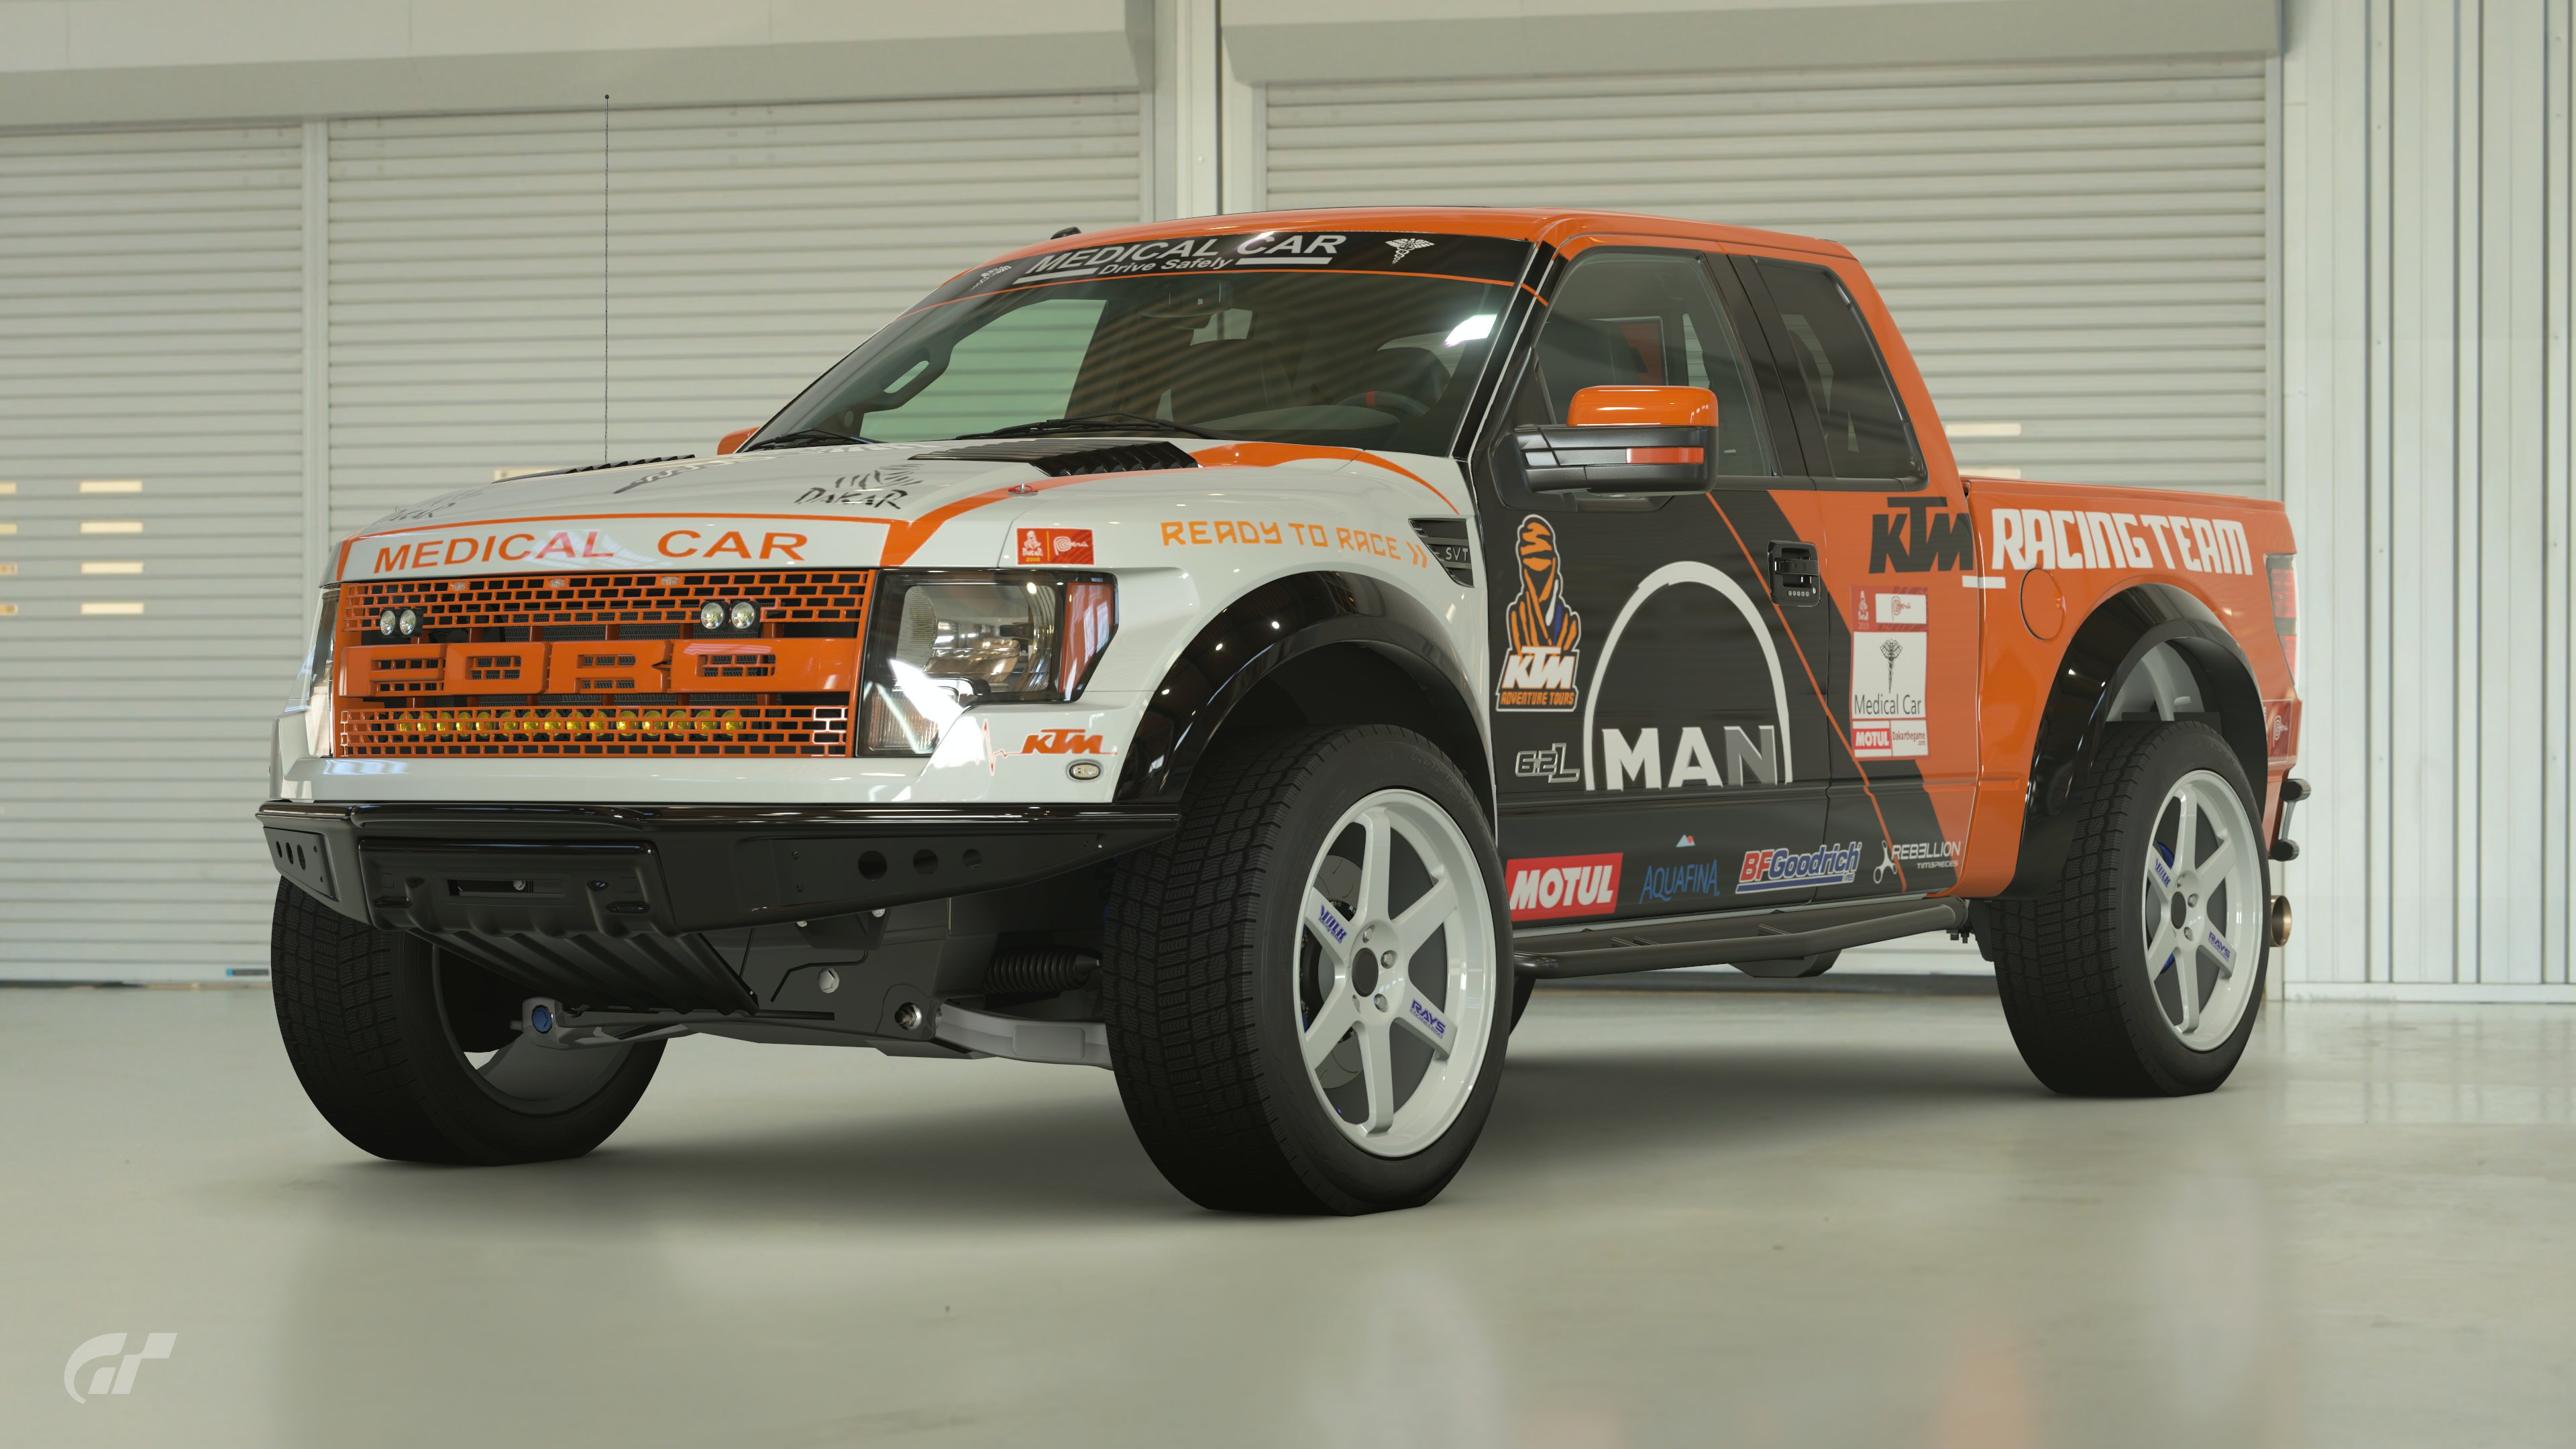 KTM Dakar Race Team Medical Truck